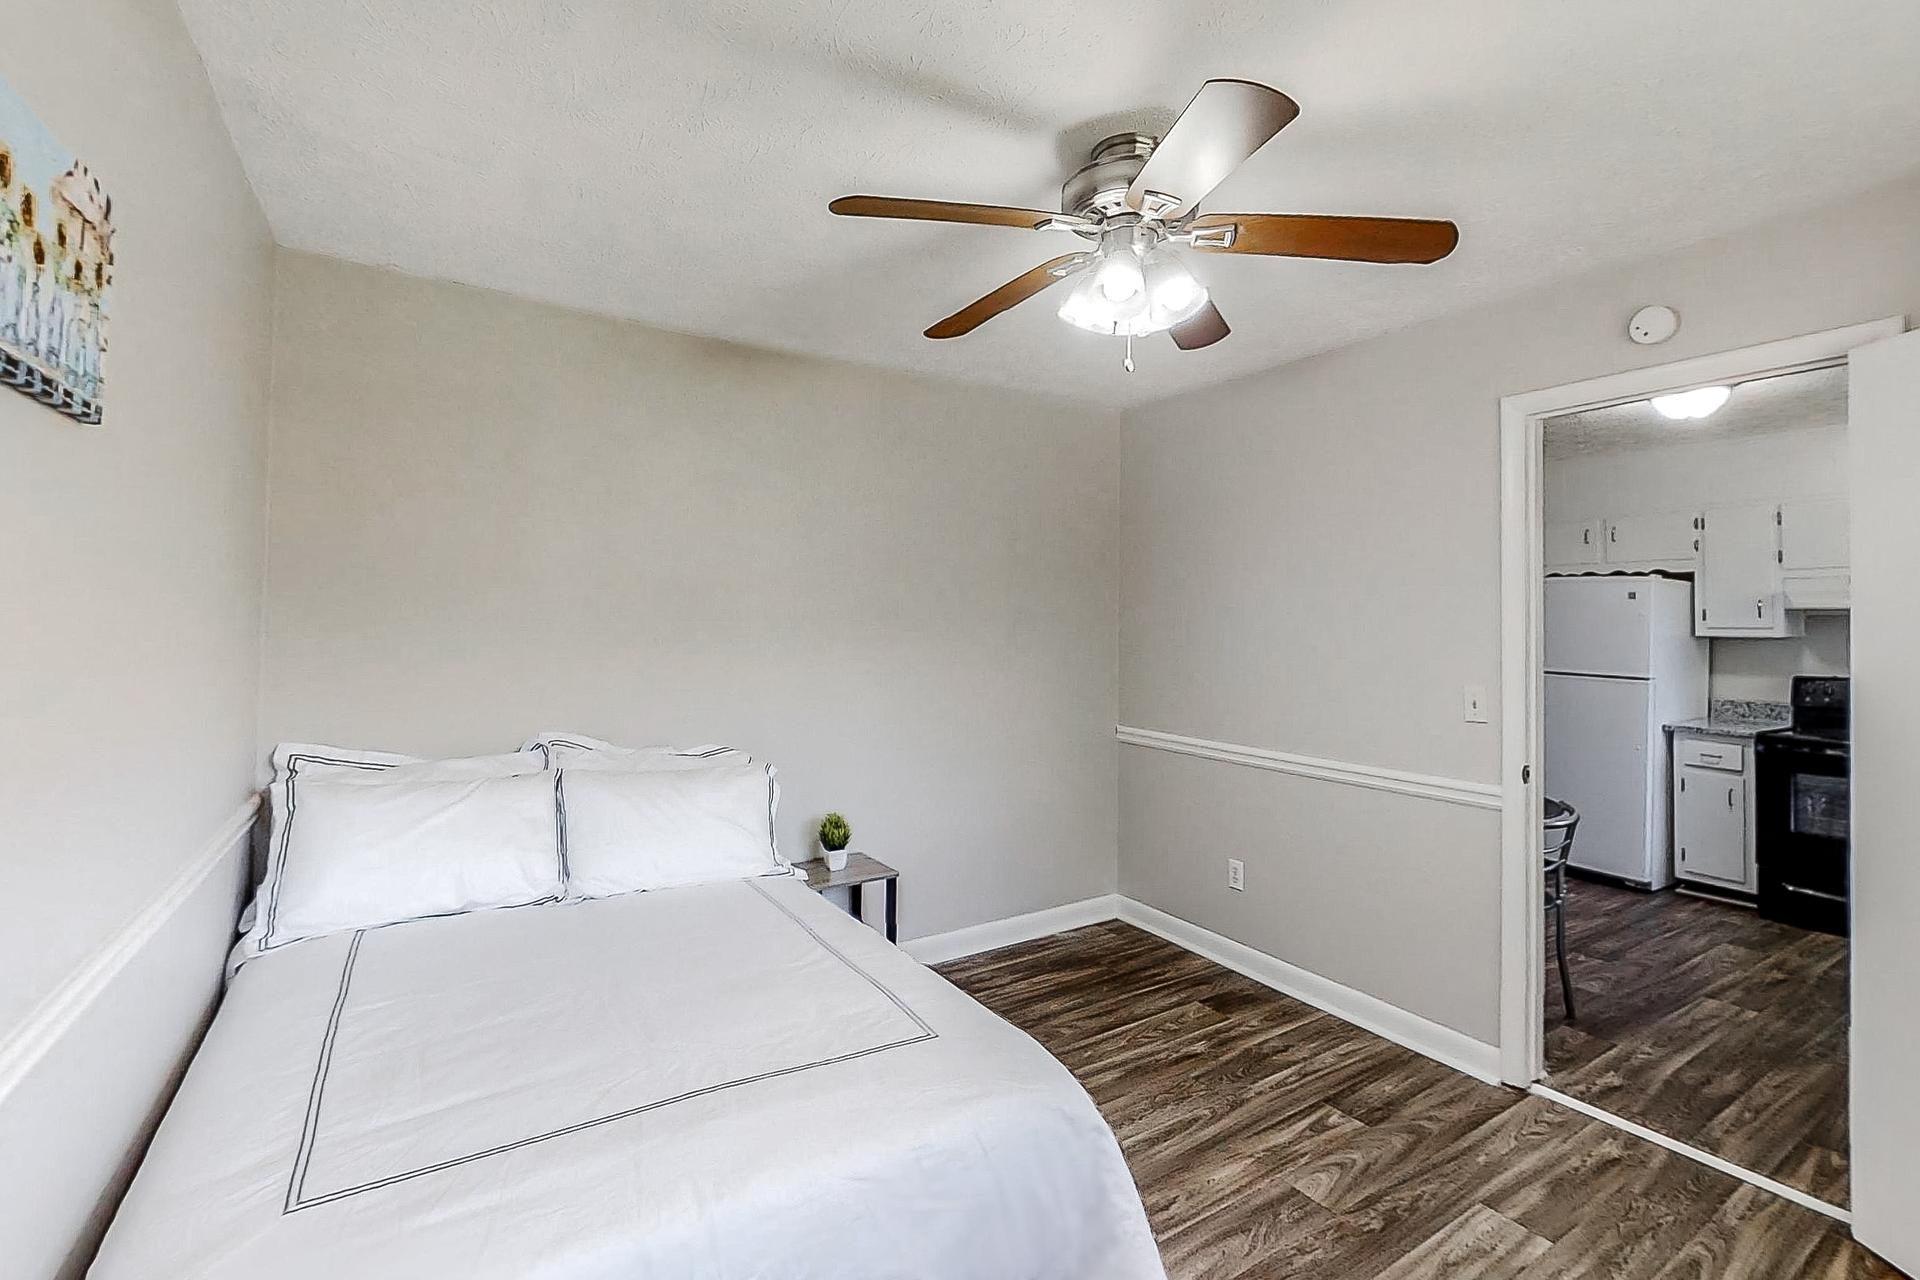 bedroom, detected: ceiling fan, bed, window blind